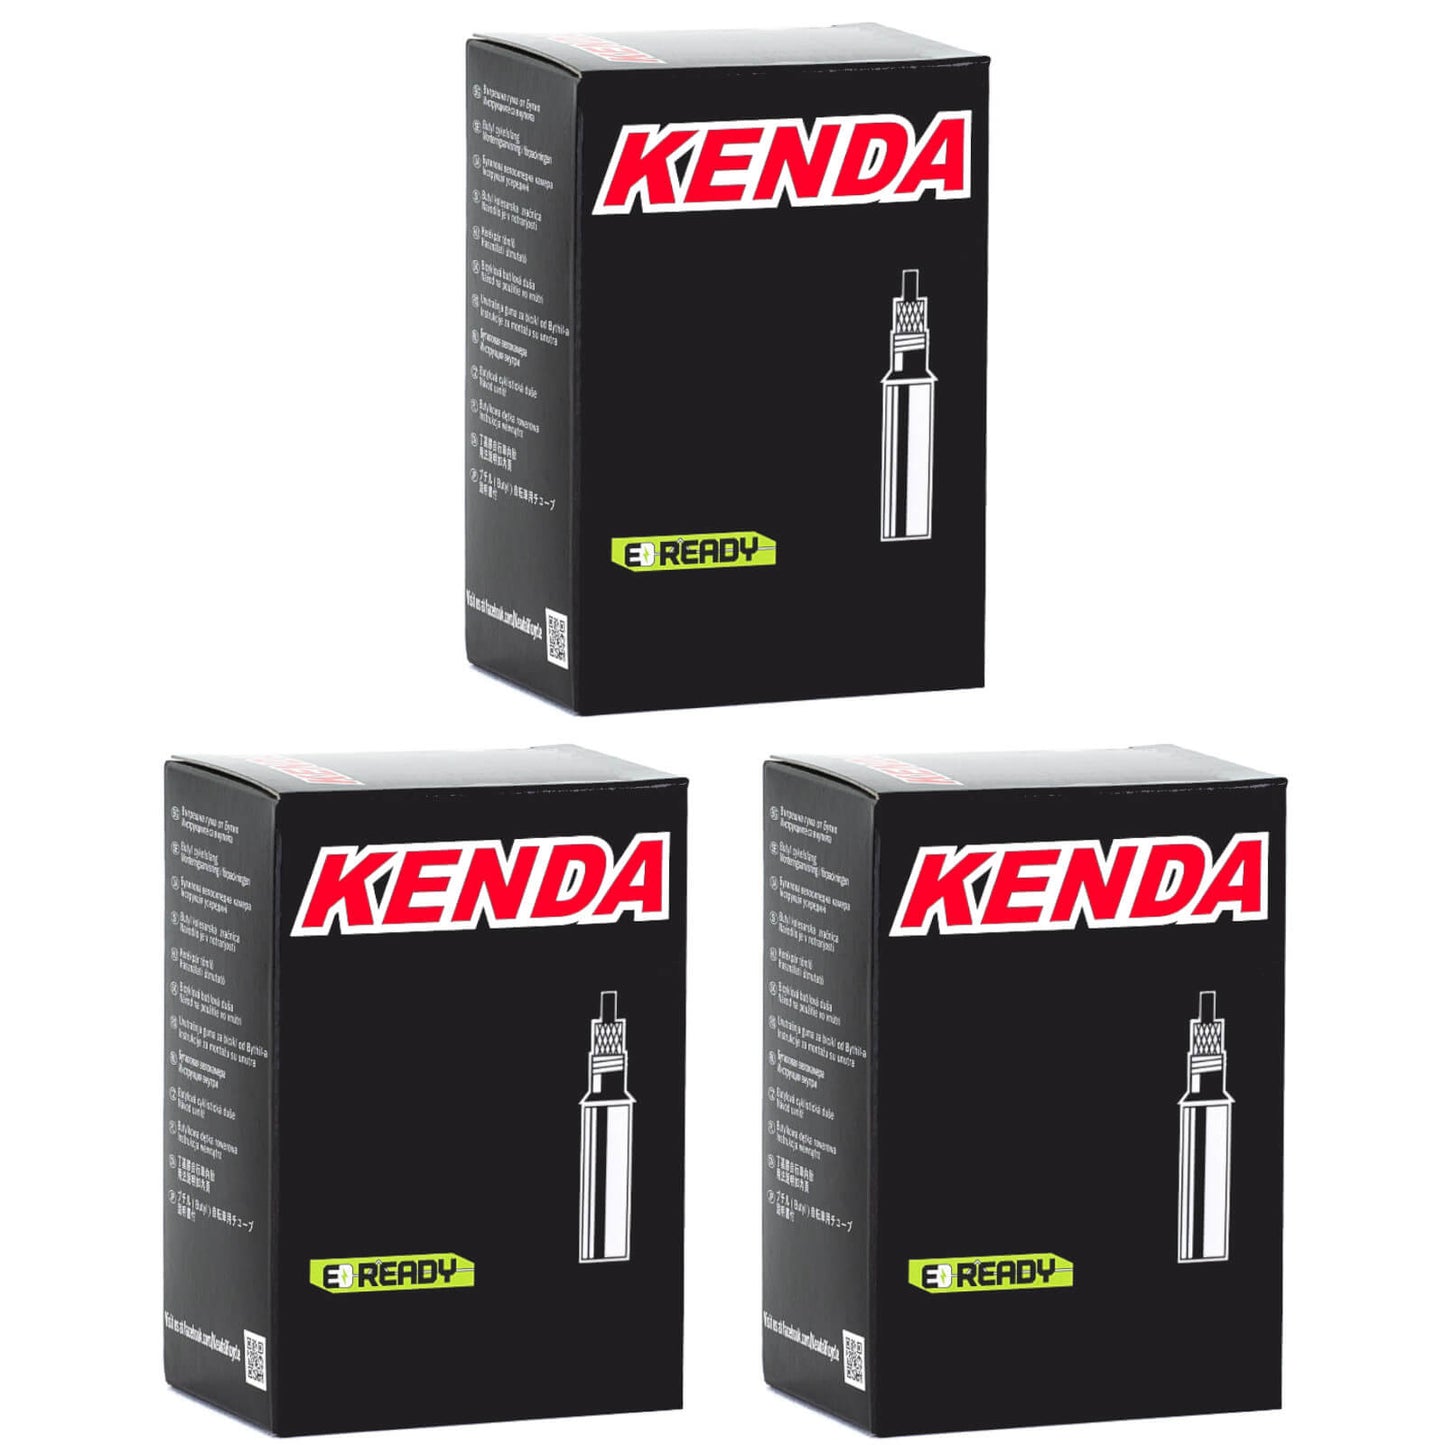 Kenda 27.5x2.4-2.8" Removable Core 27.5 Inch Presta Valve Bike Inner Tube Pack of 3